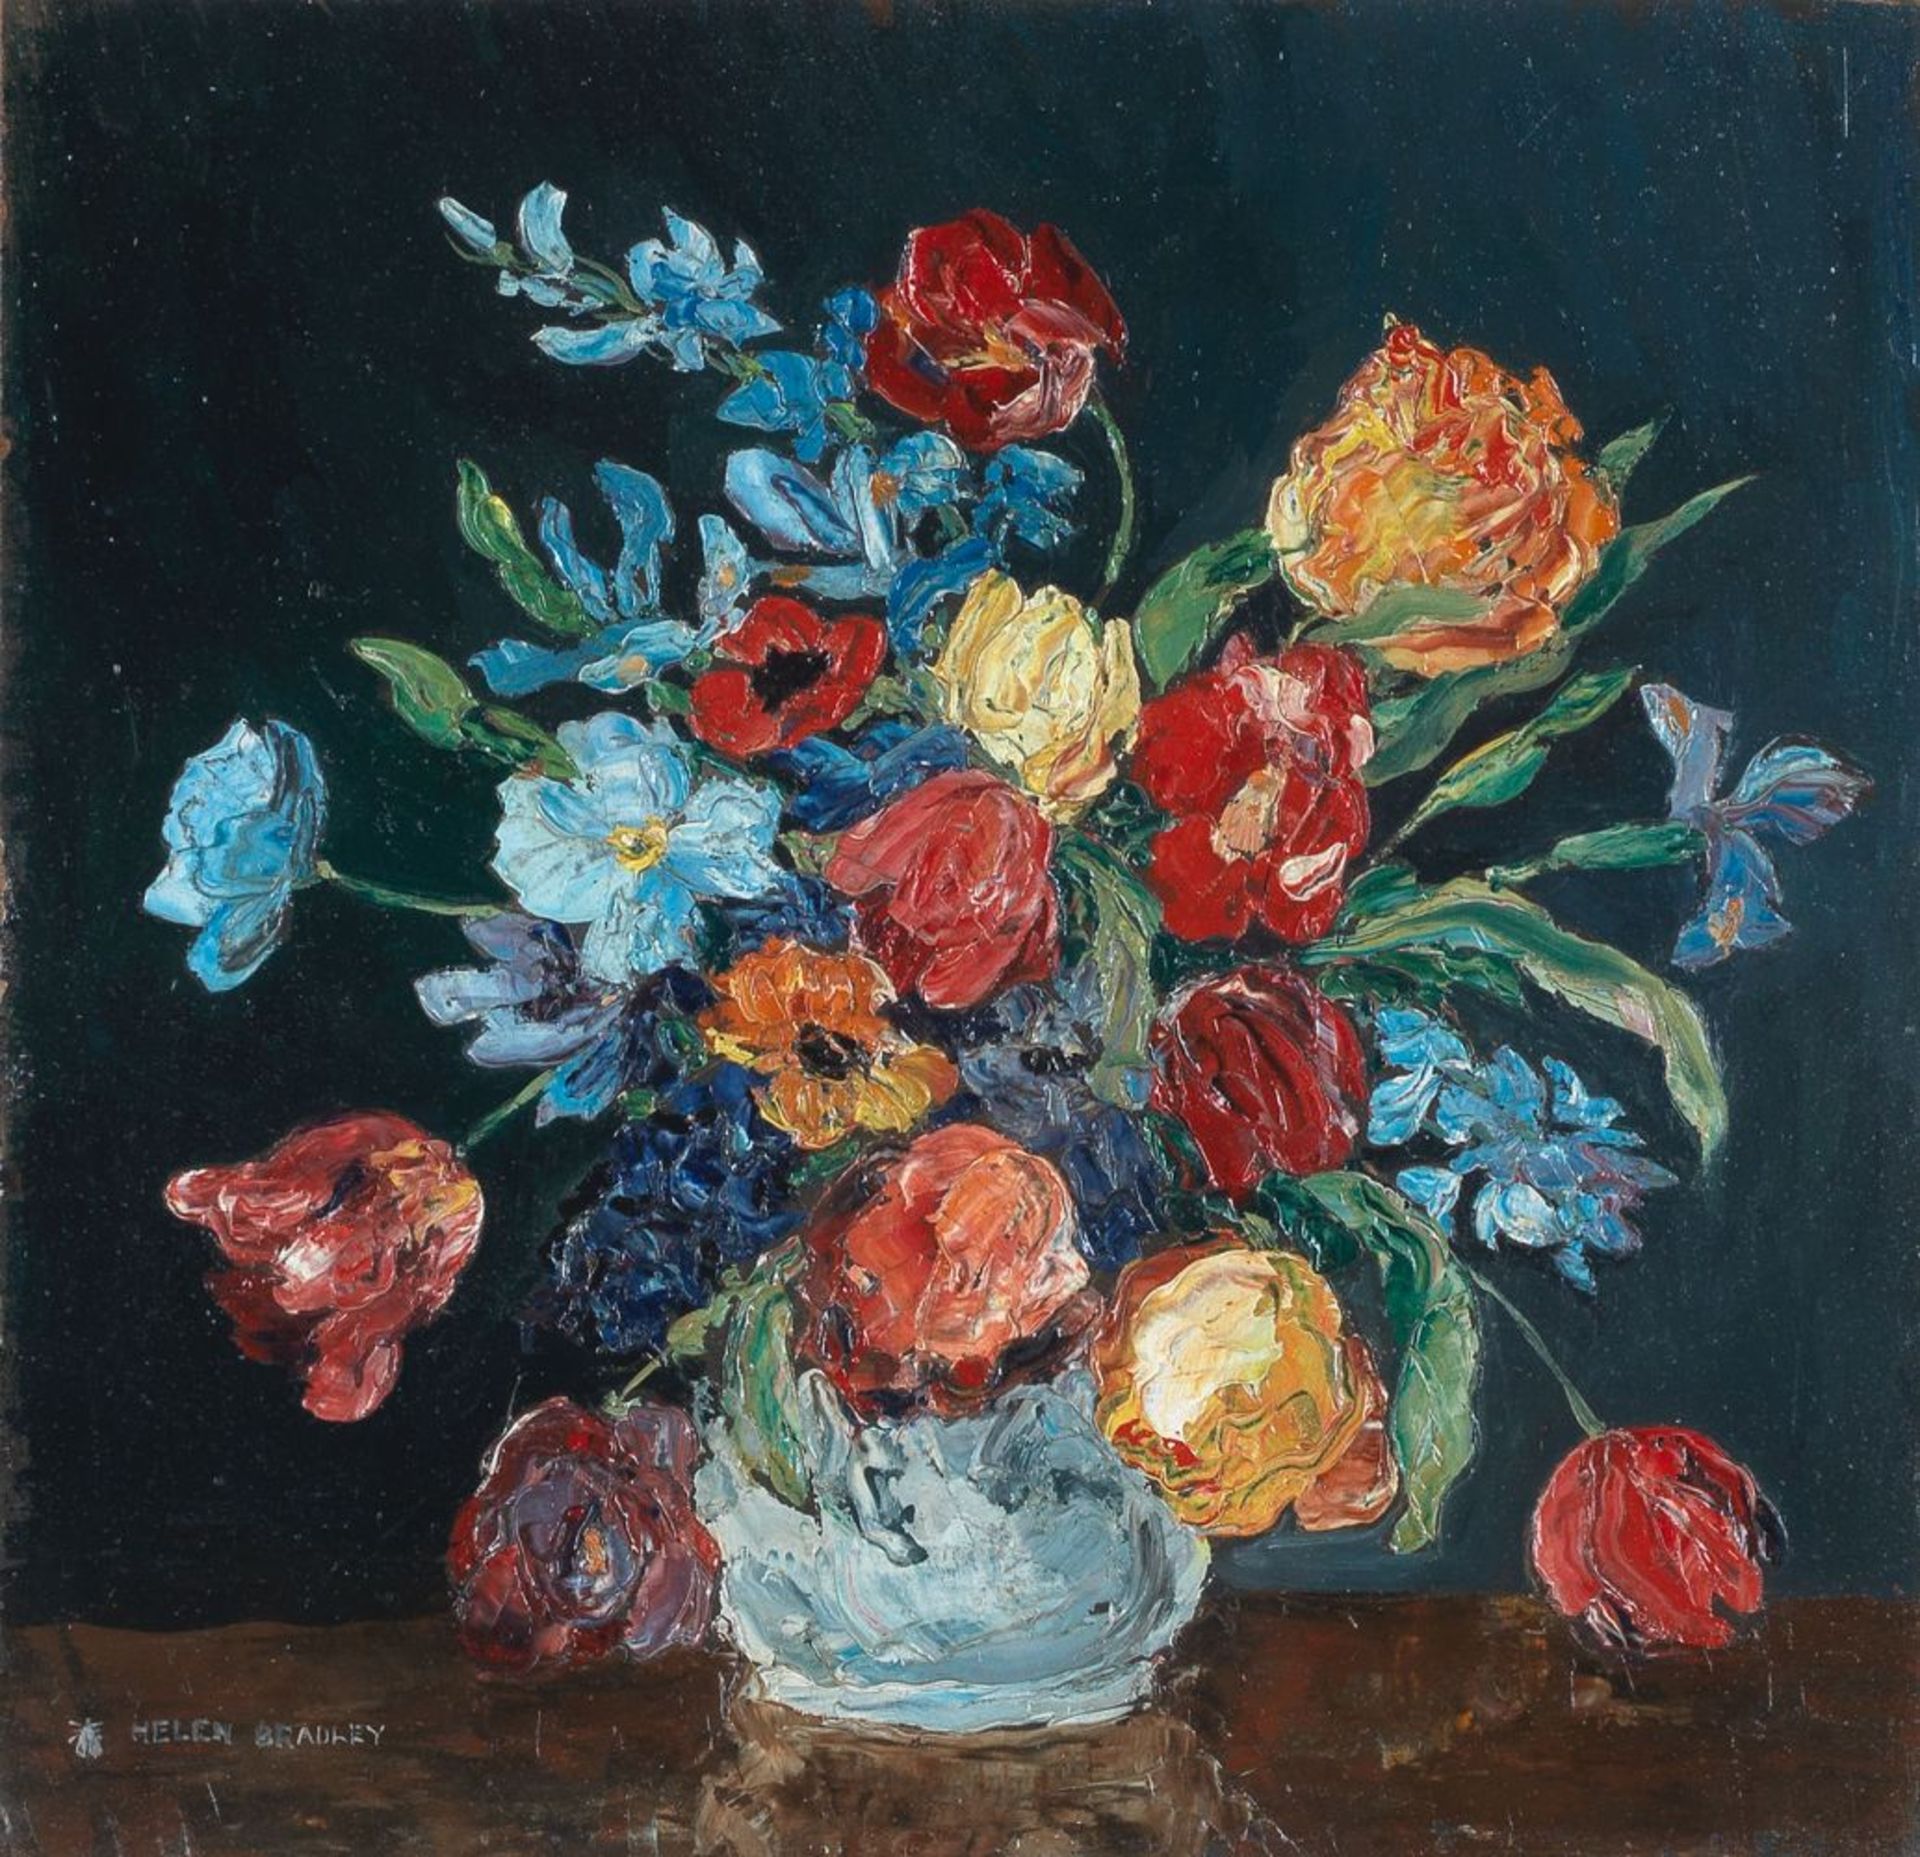 Helen Bradley (British, 1900-1979) Still Life of Flowers